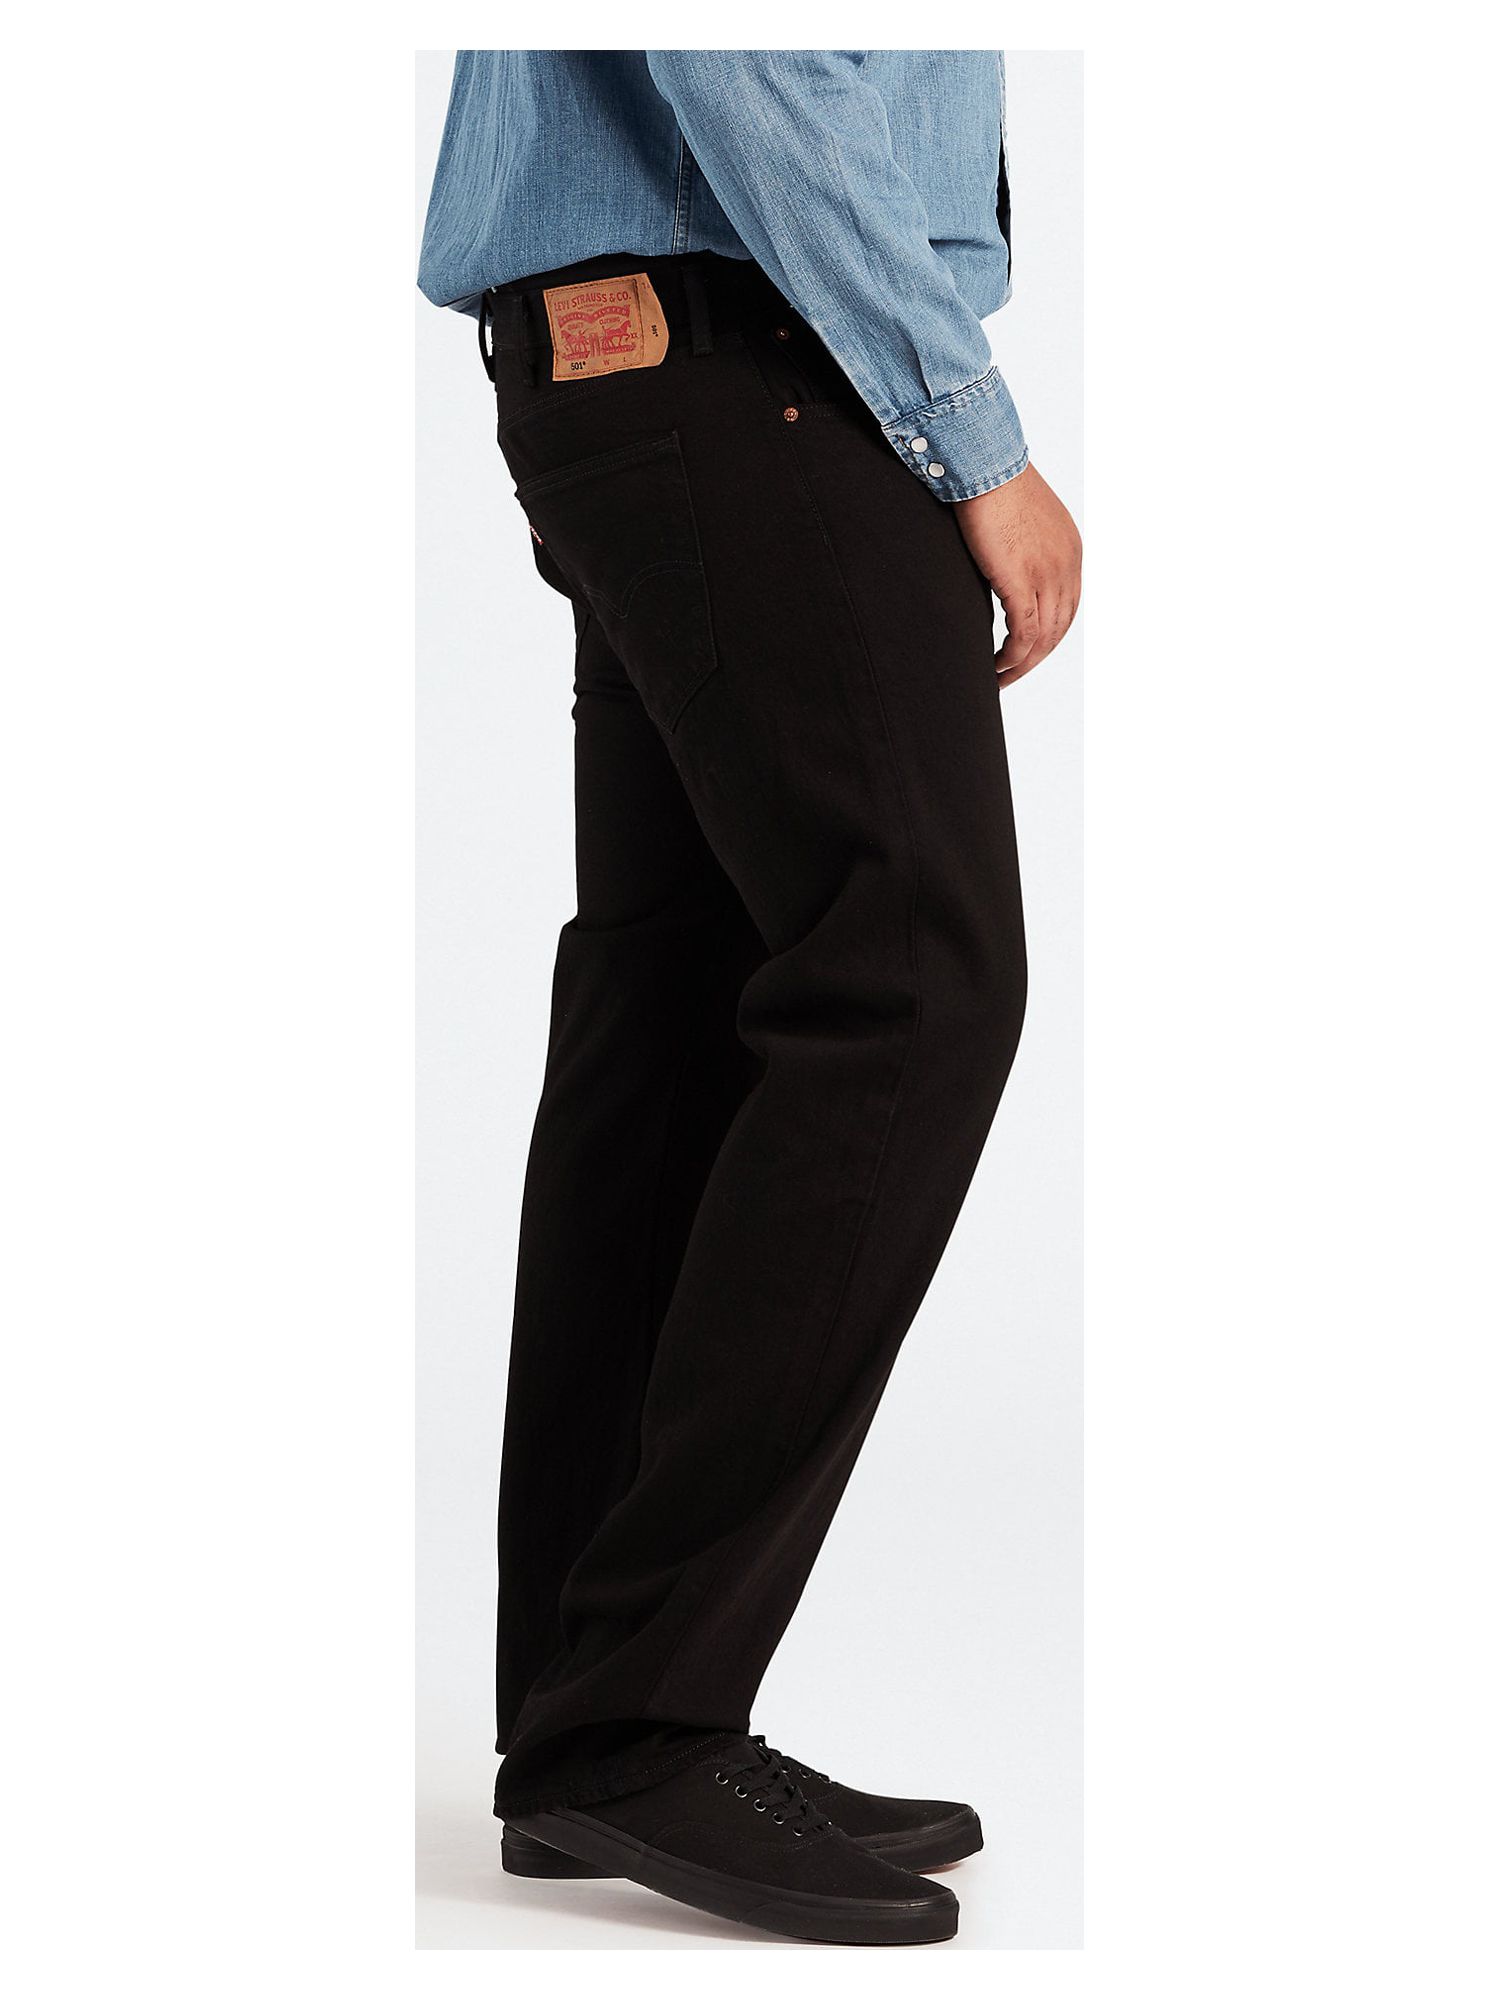 Levi's Men's Big & Tall 501 Original Fit Jeans - image 7 of 8